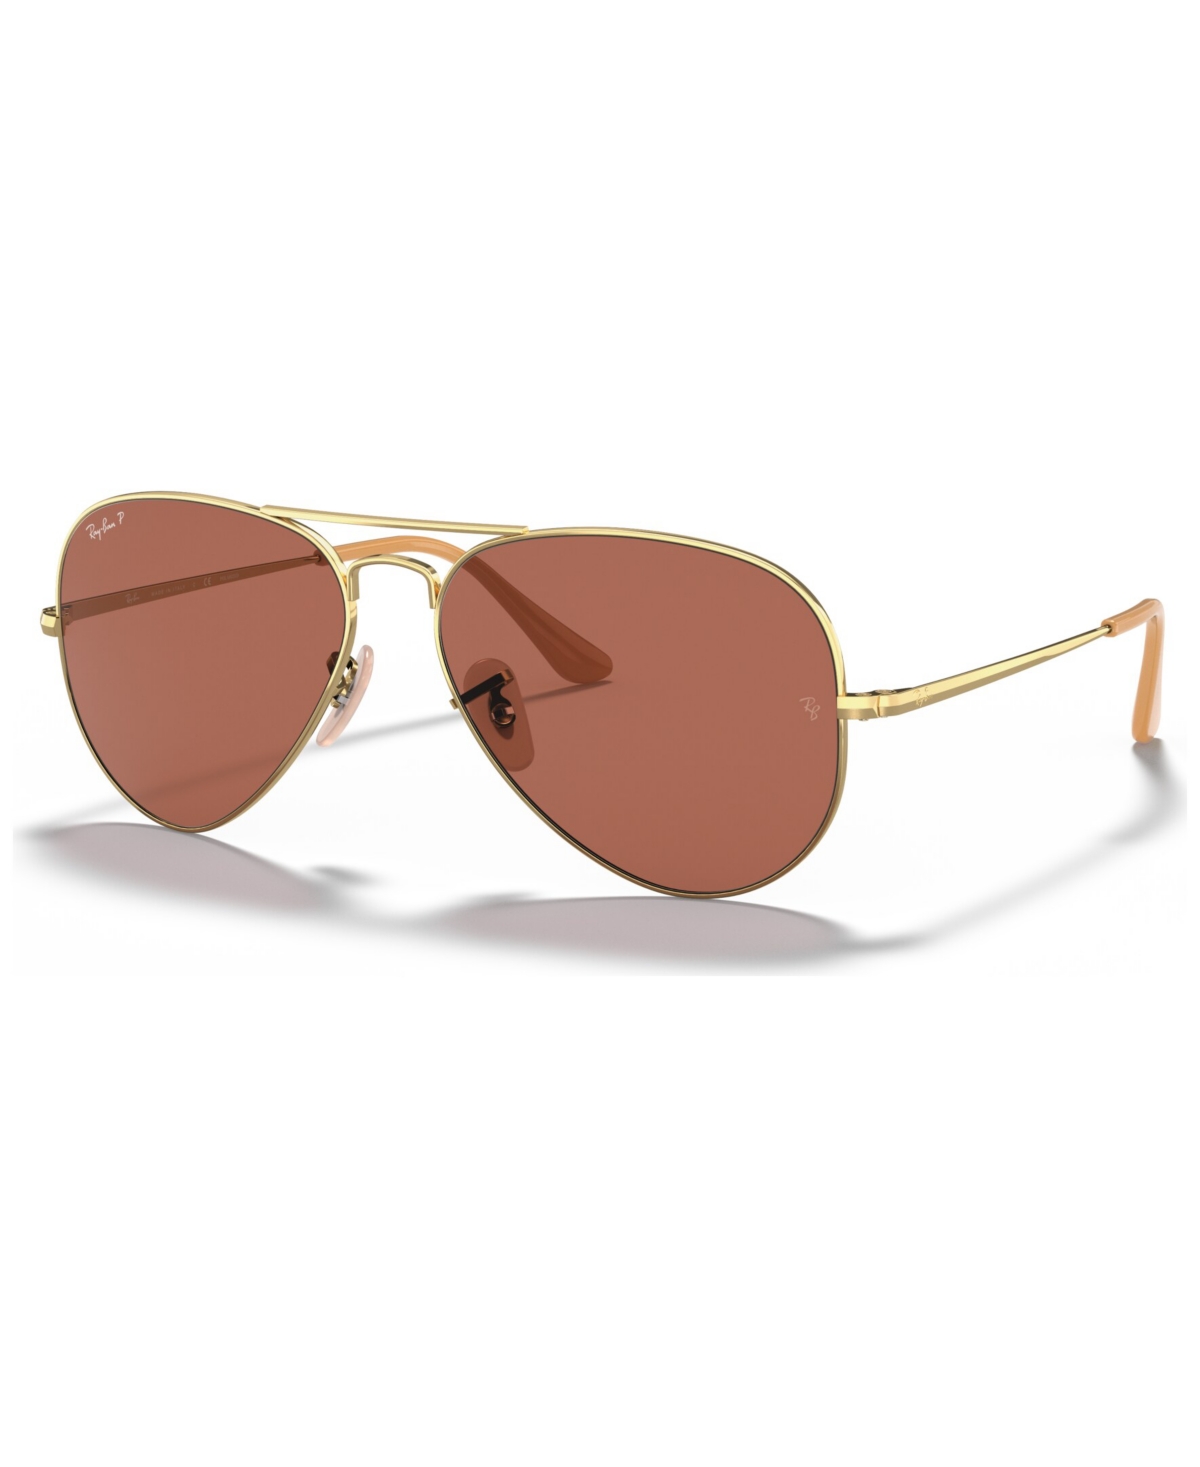 Ray Ban Unisex Polarized Sunglasses, Aviator Metal Ii In Gold-tone